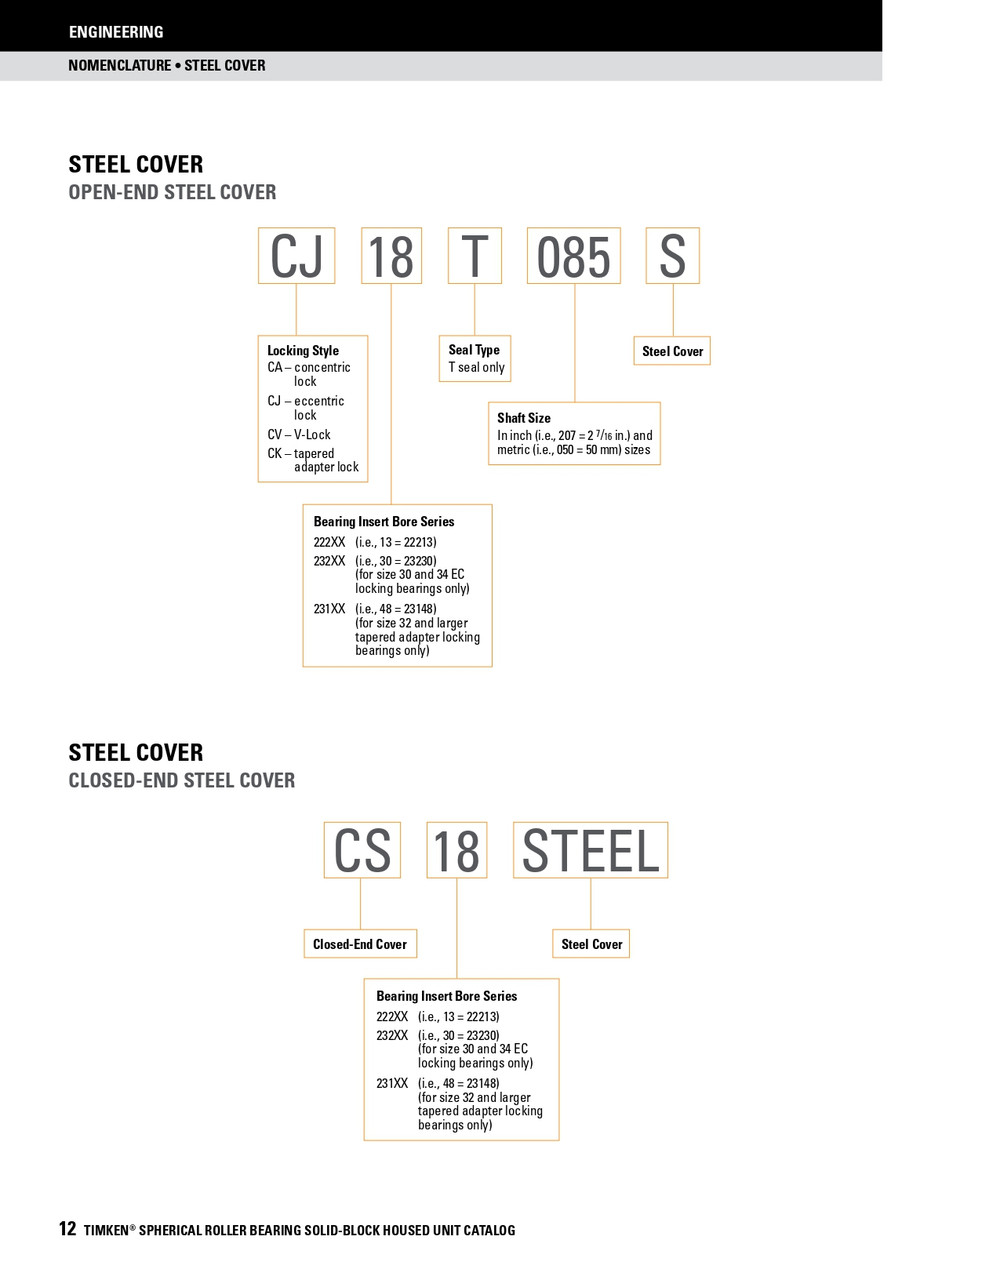 2-15/16" Timken SRB Steel Open End Cover w/Teflon Seal - QA Concentric Lock Type  CA15T215S